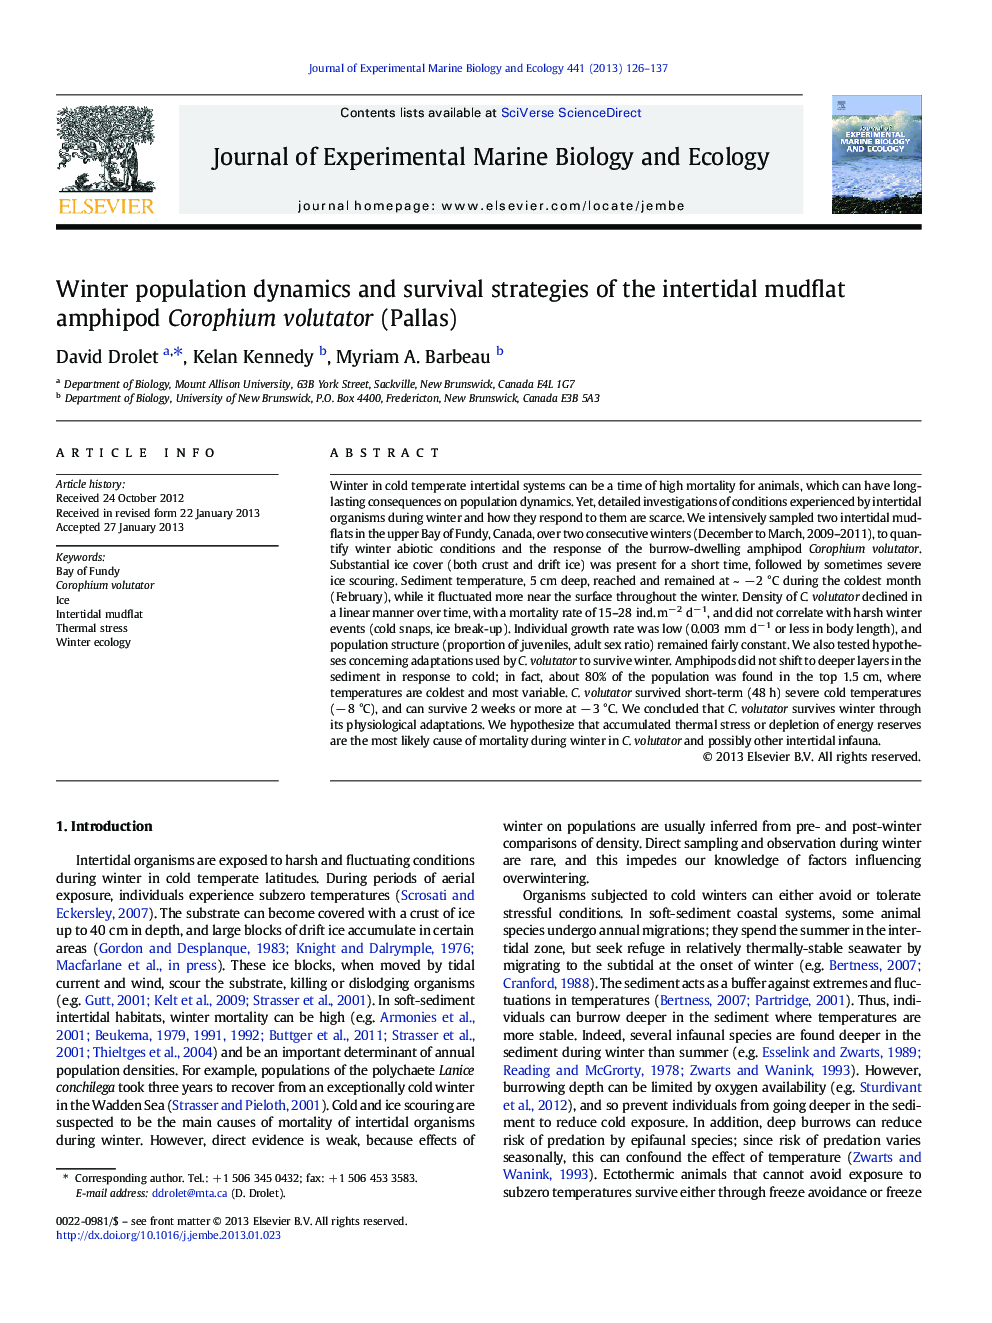 Winter population dynamics and survival strategies of the intertidal mudflat amphipod Corophium volutator (Pallas)